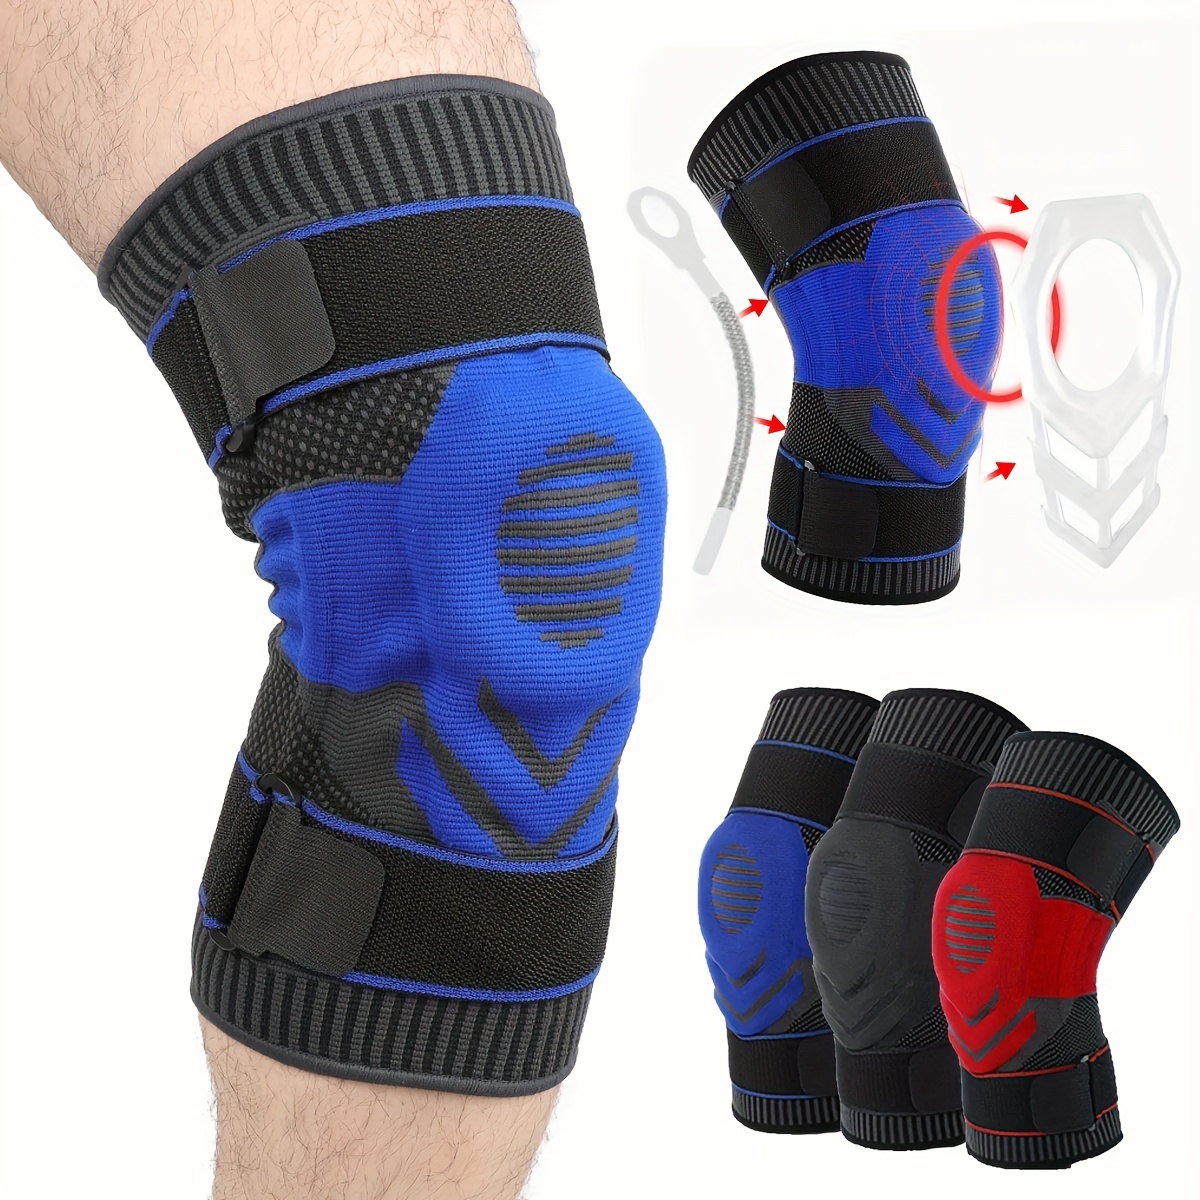 NEENCA 1 Pcs Knee Brace with Side Stabilizers Patella Gel Pad Knee